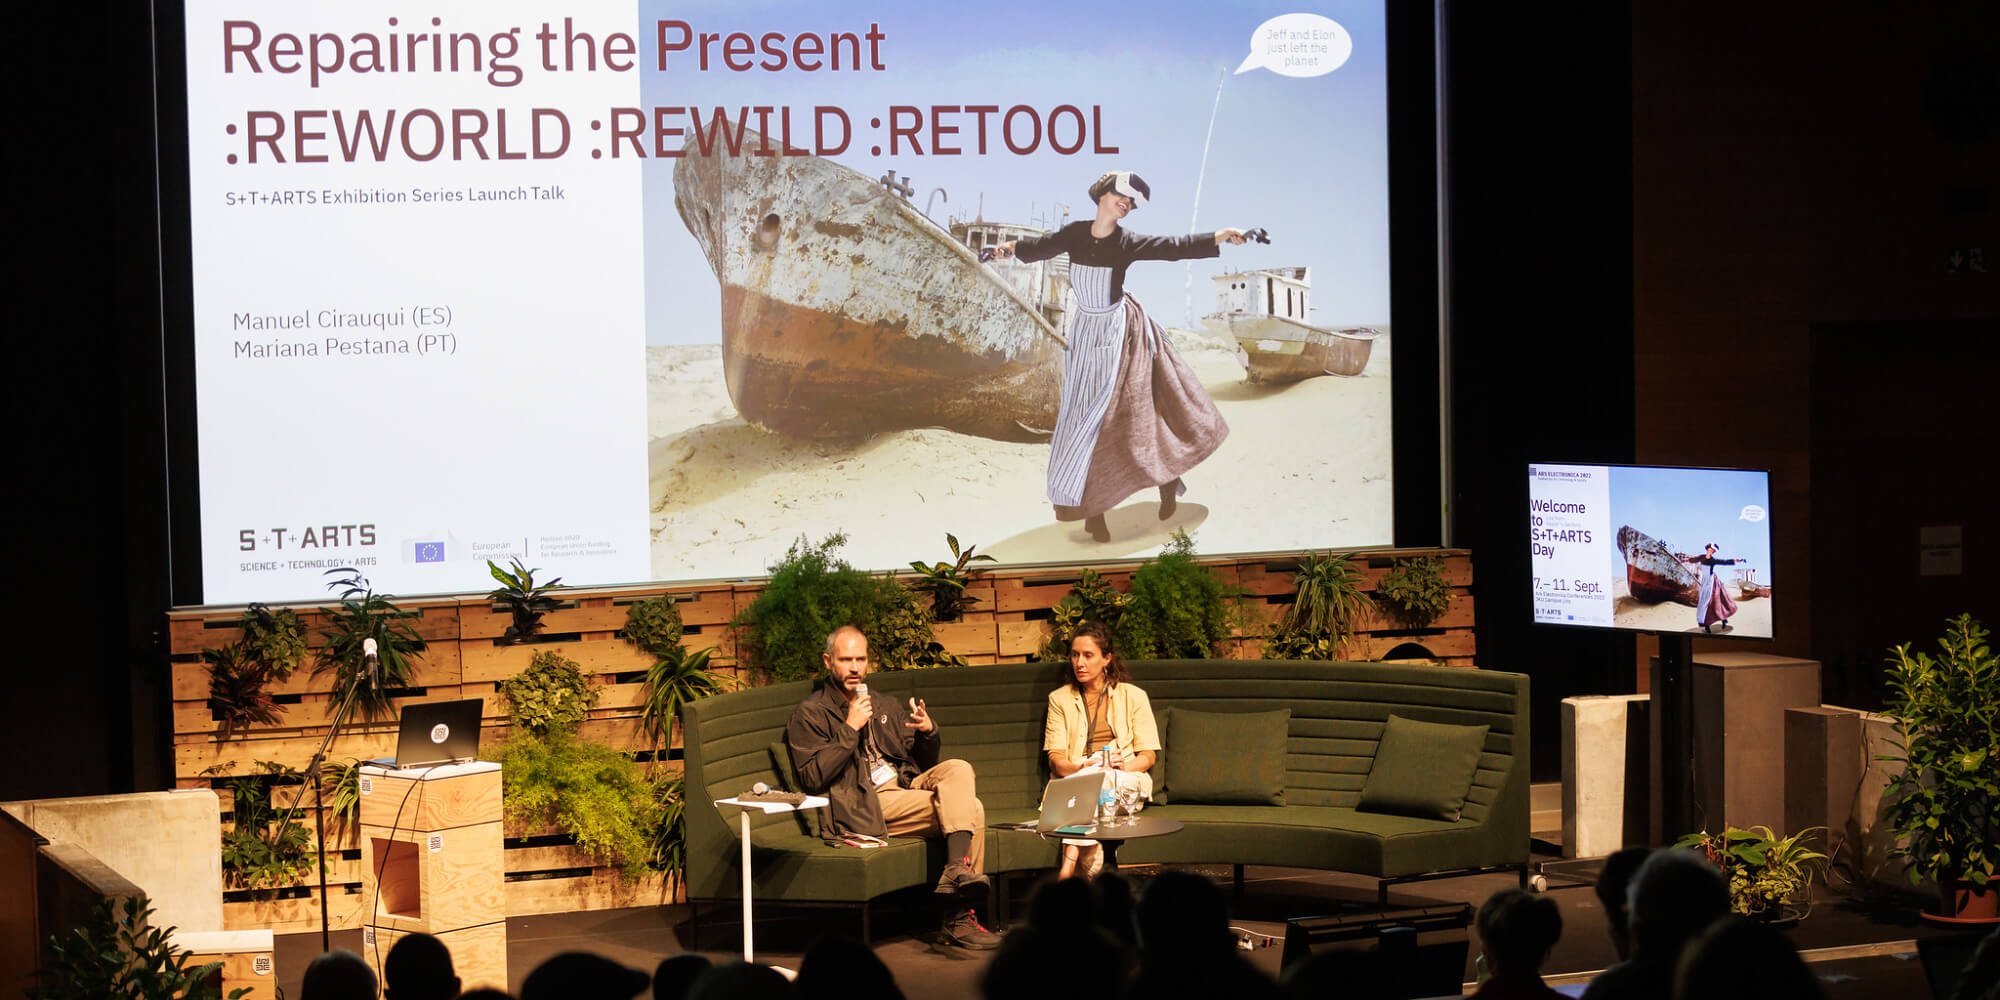 Repairing the Present REWORLD REWILD and RETOOL / Manuel Cirauqui (ES), Mariana Pestana (PT)